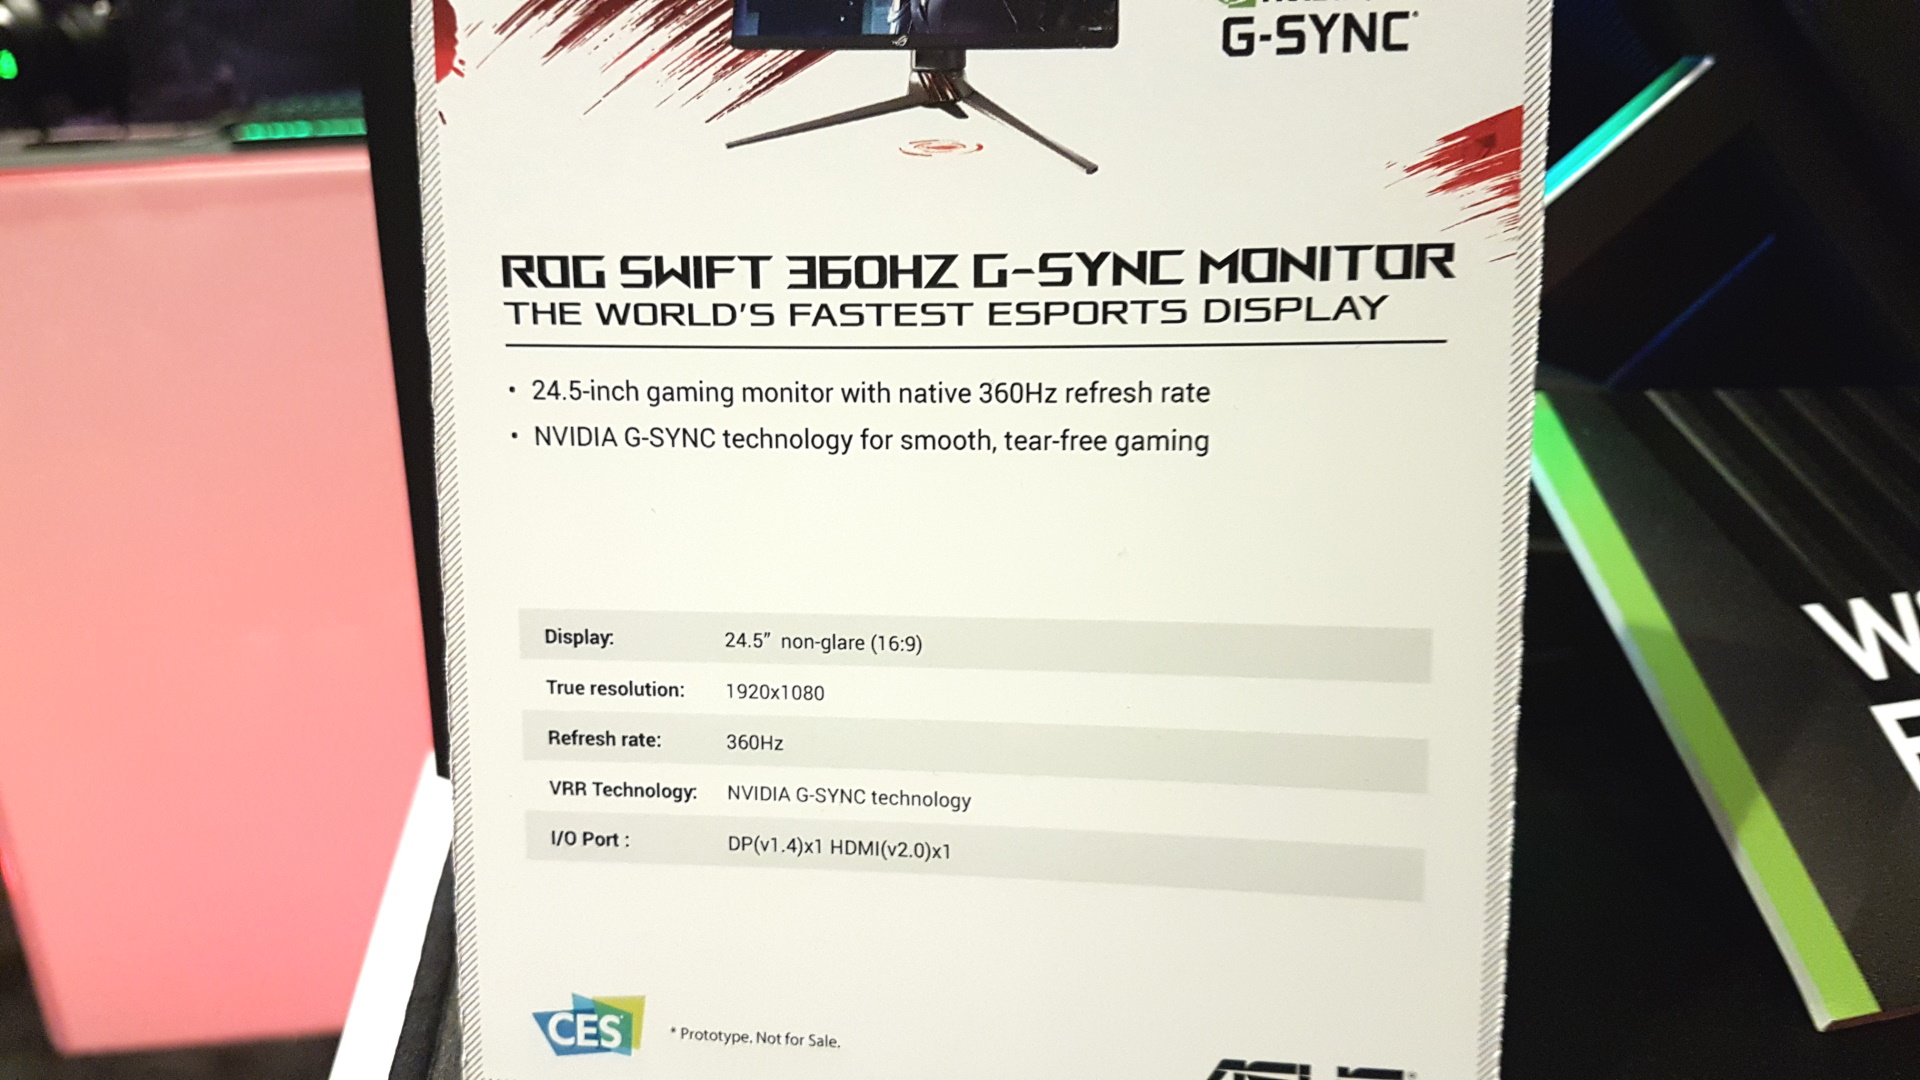 G-SYNC 360Hz Esports Displays, GeForce News